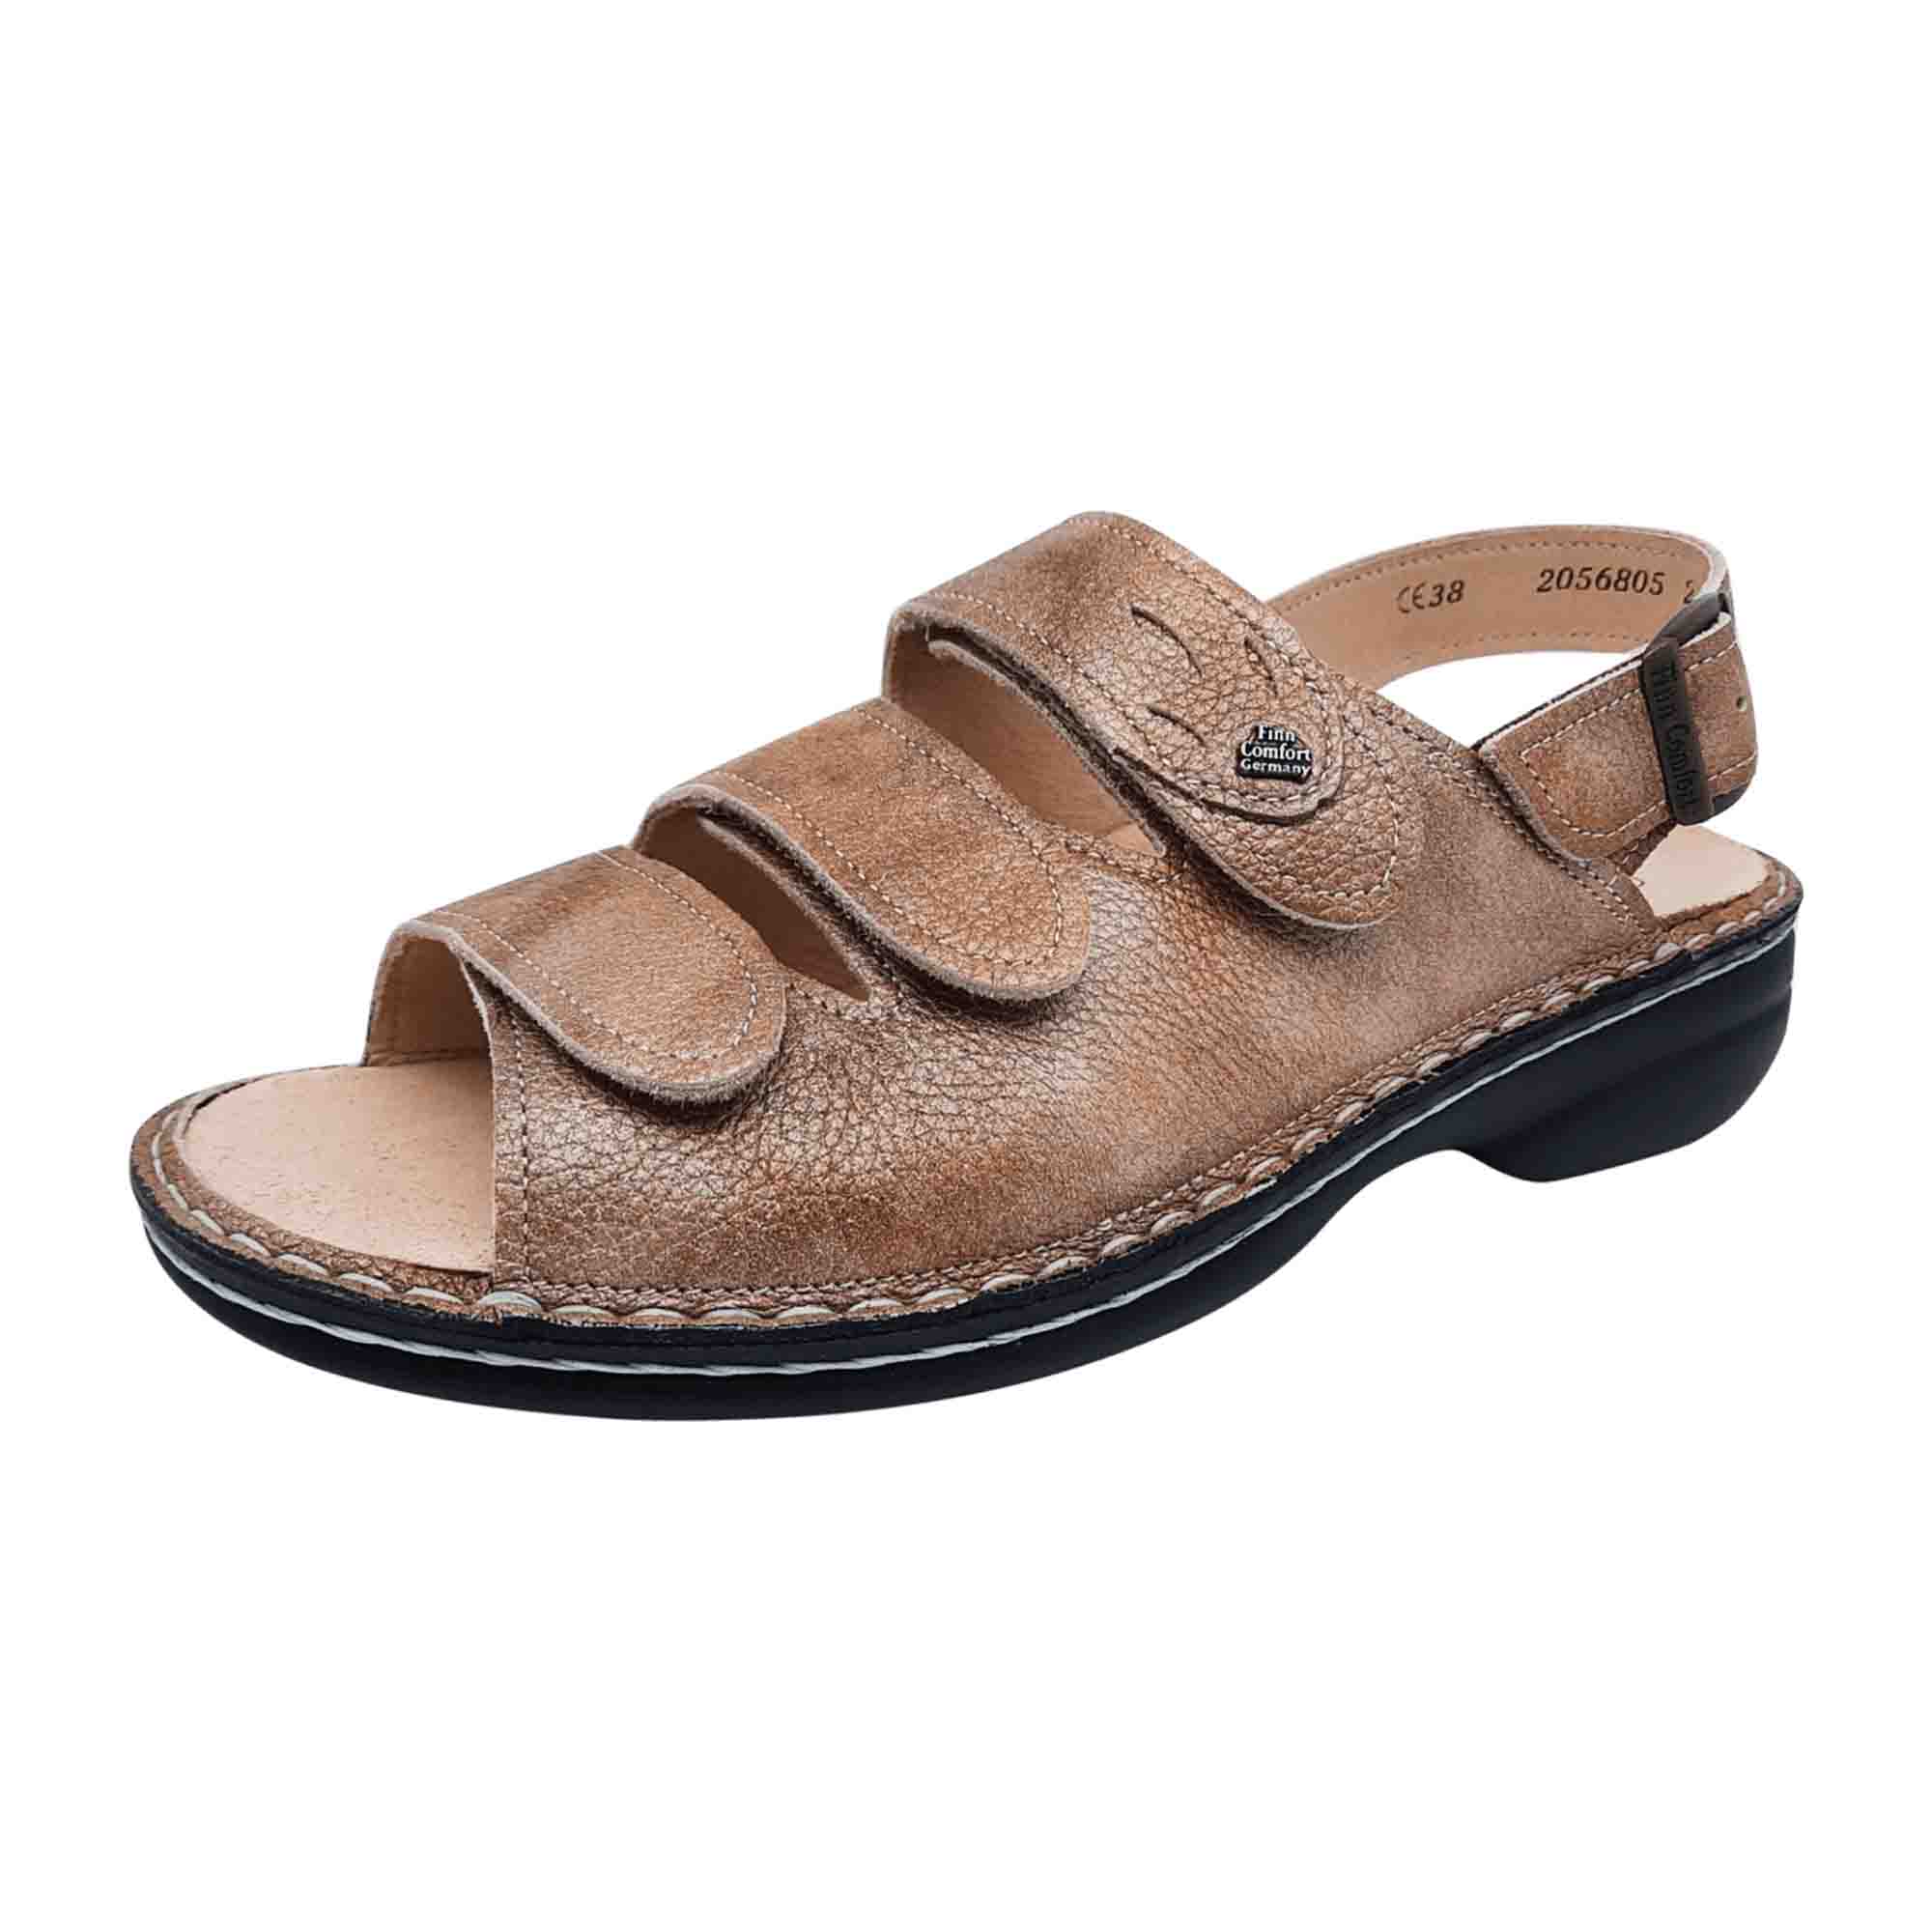 Finn Comfort SALONIKI Women's Comfort Sandals - Chic Brown Leather